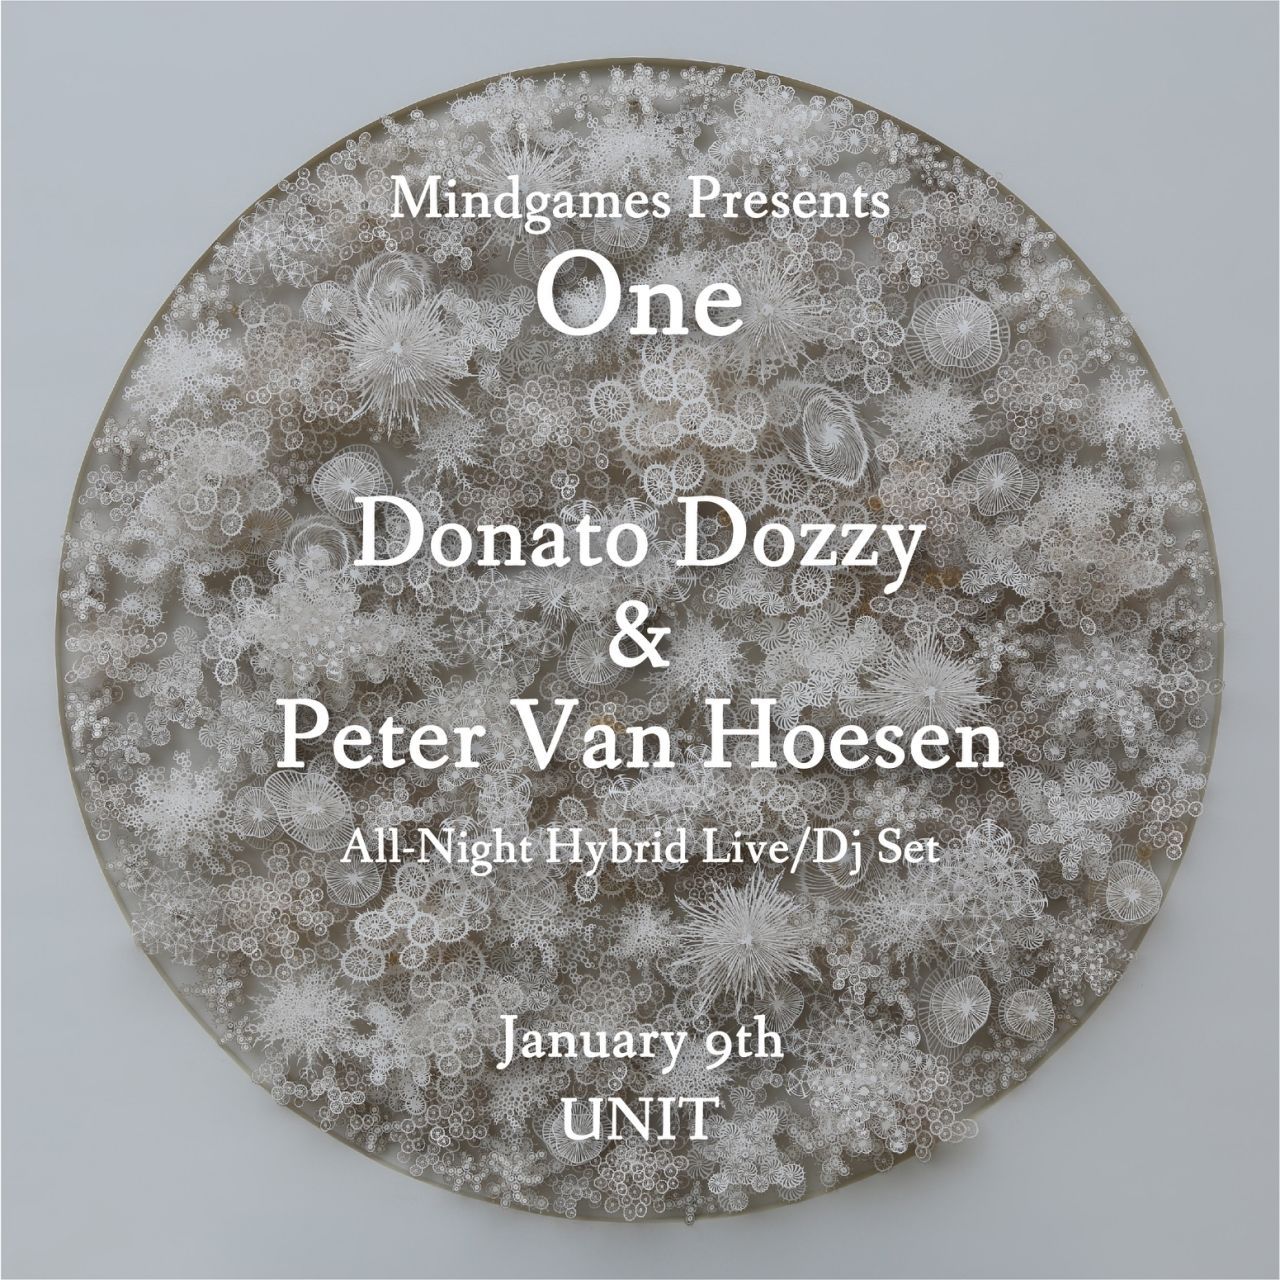 Mindgames: “One” with Donato Dozzy and Peter Van Hoesen